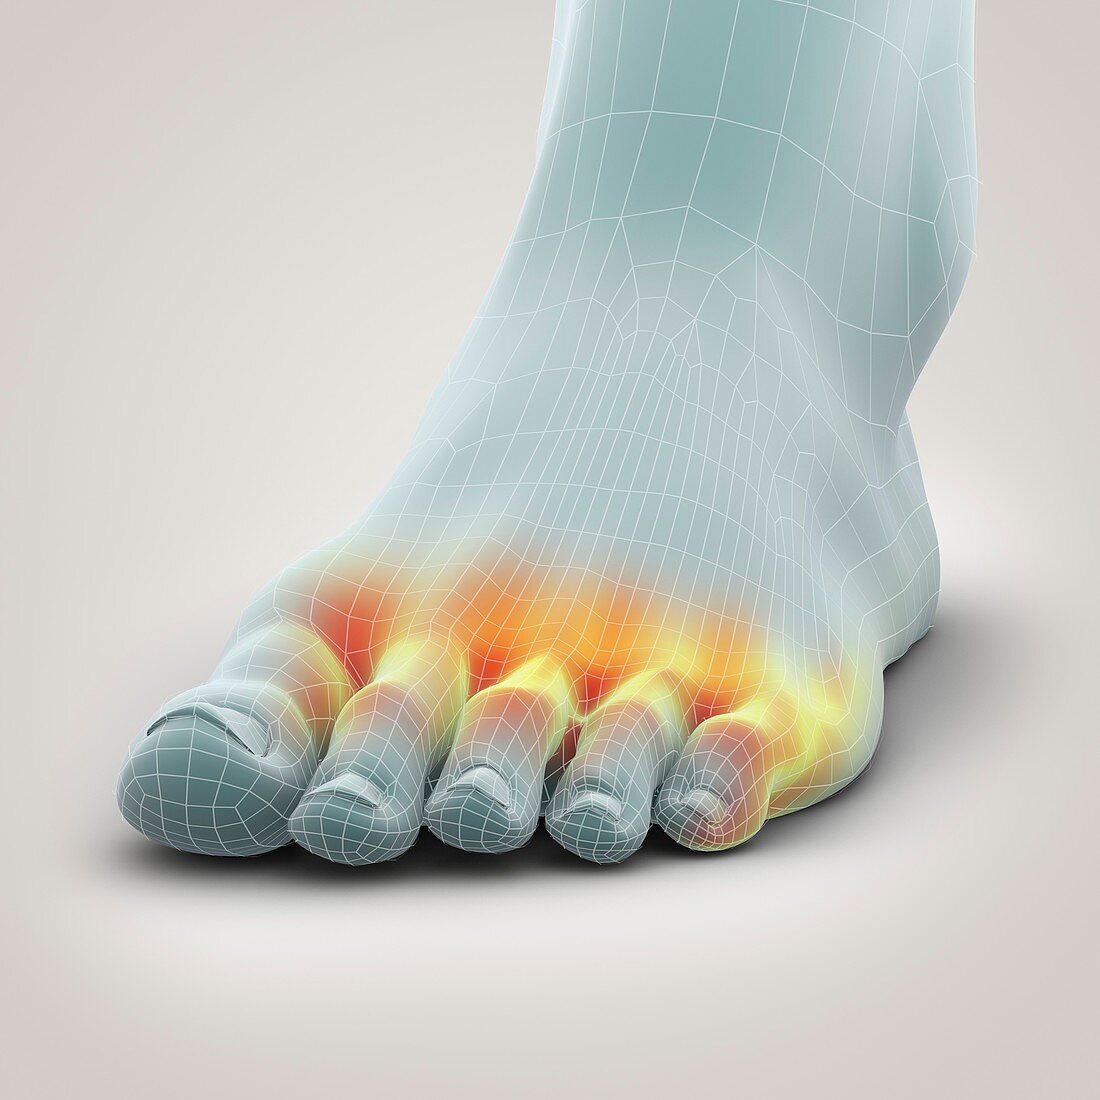 Athlete's Foot, artwork